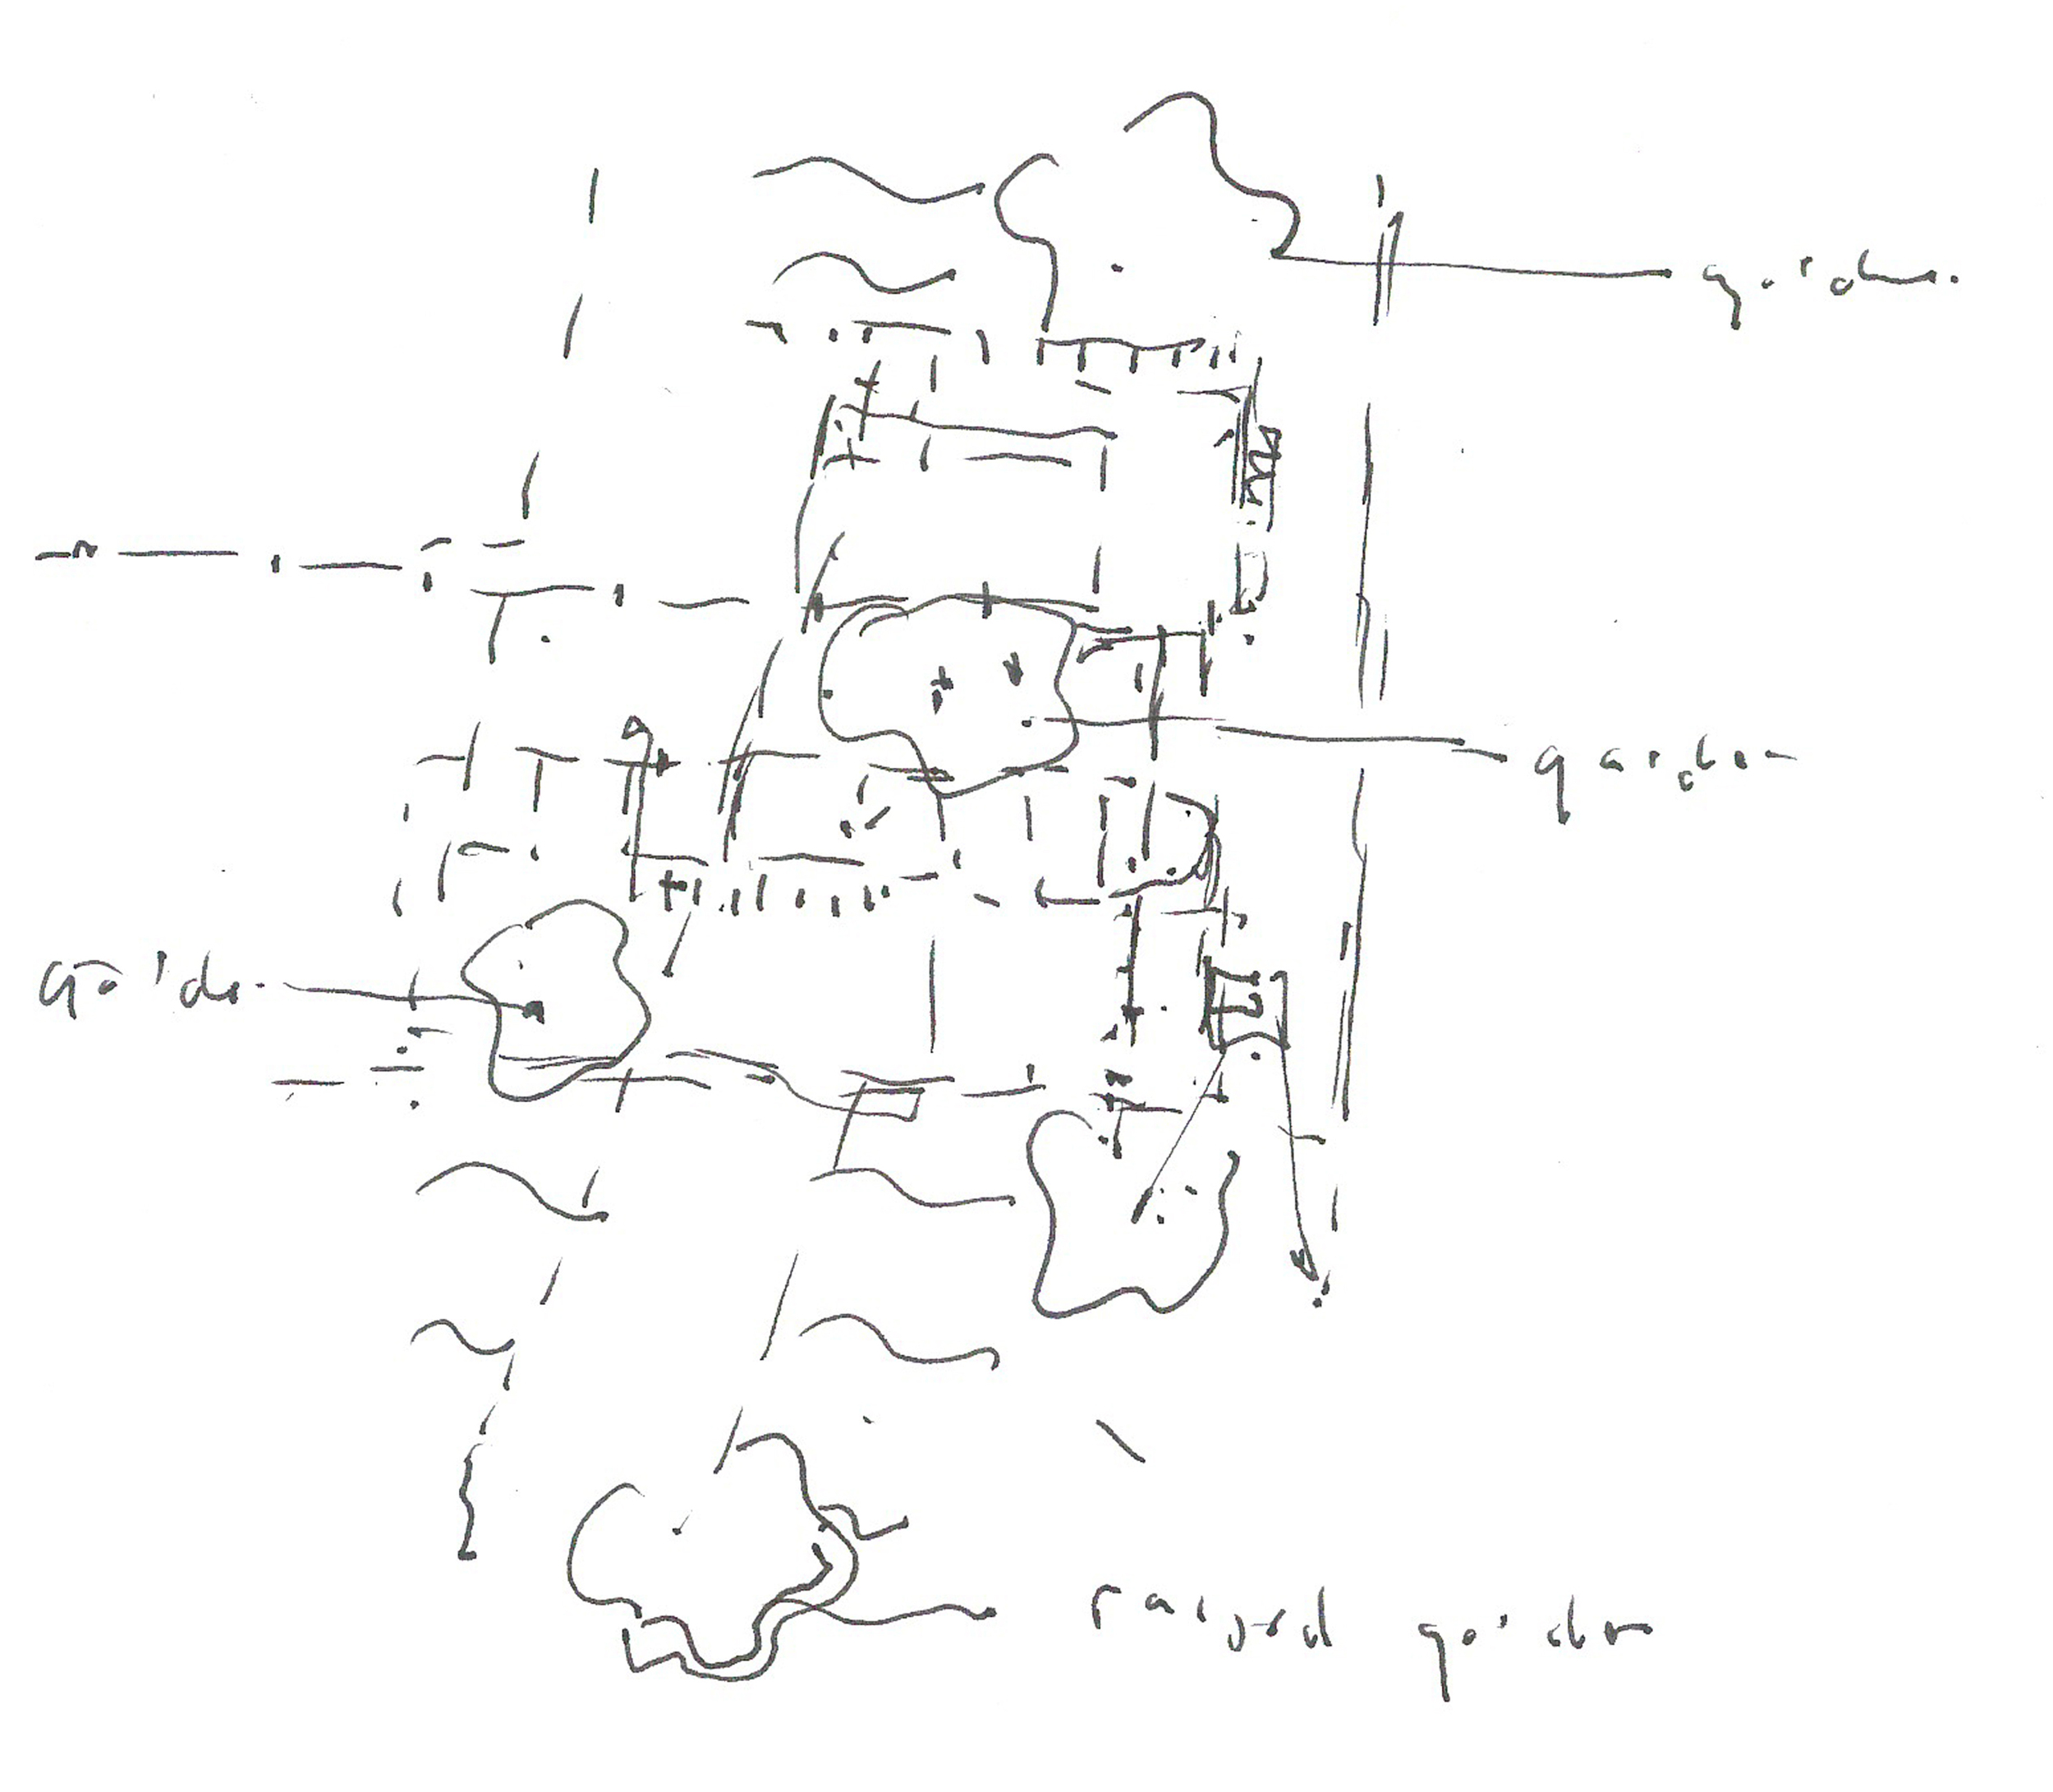 Sag Harbor Concept Sketch（Courtesy of Narofsky Architecture）